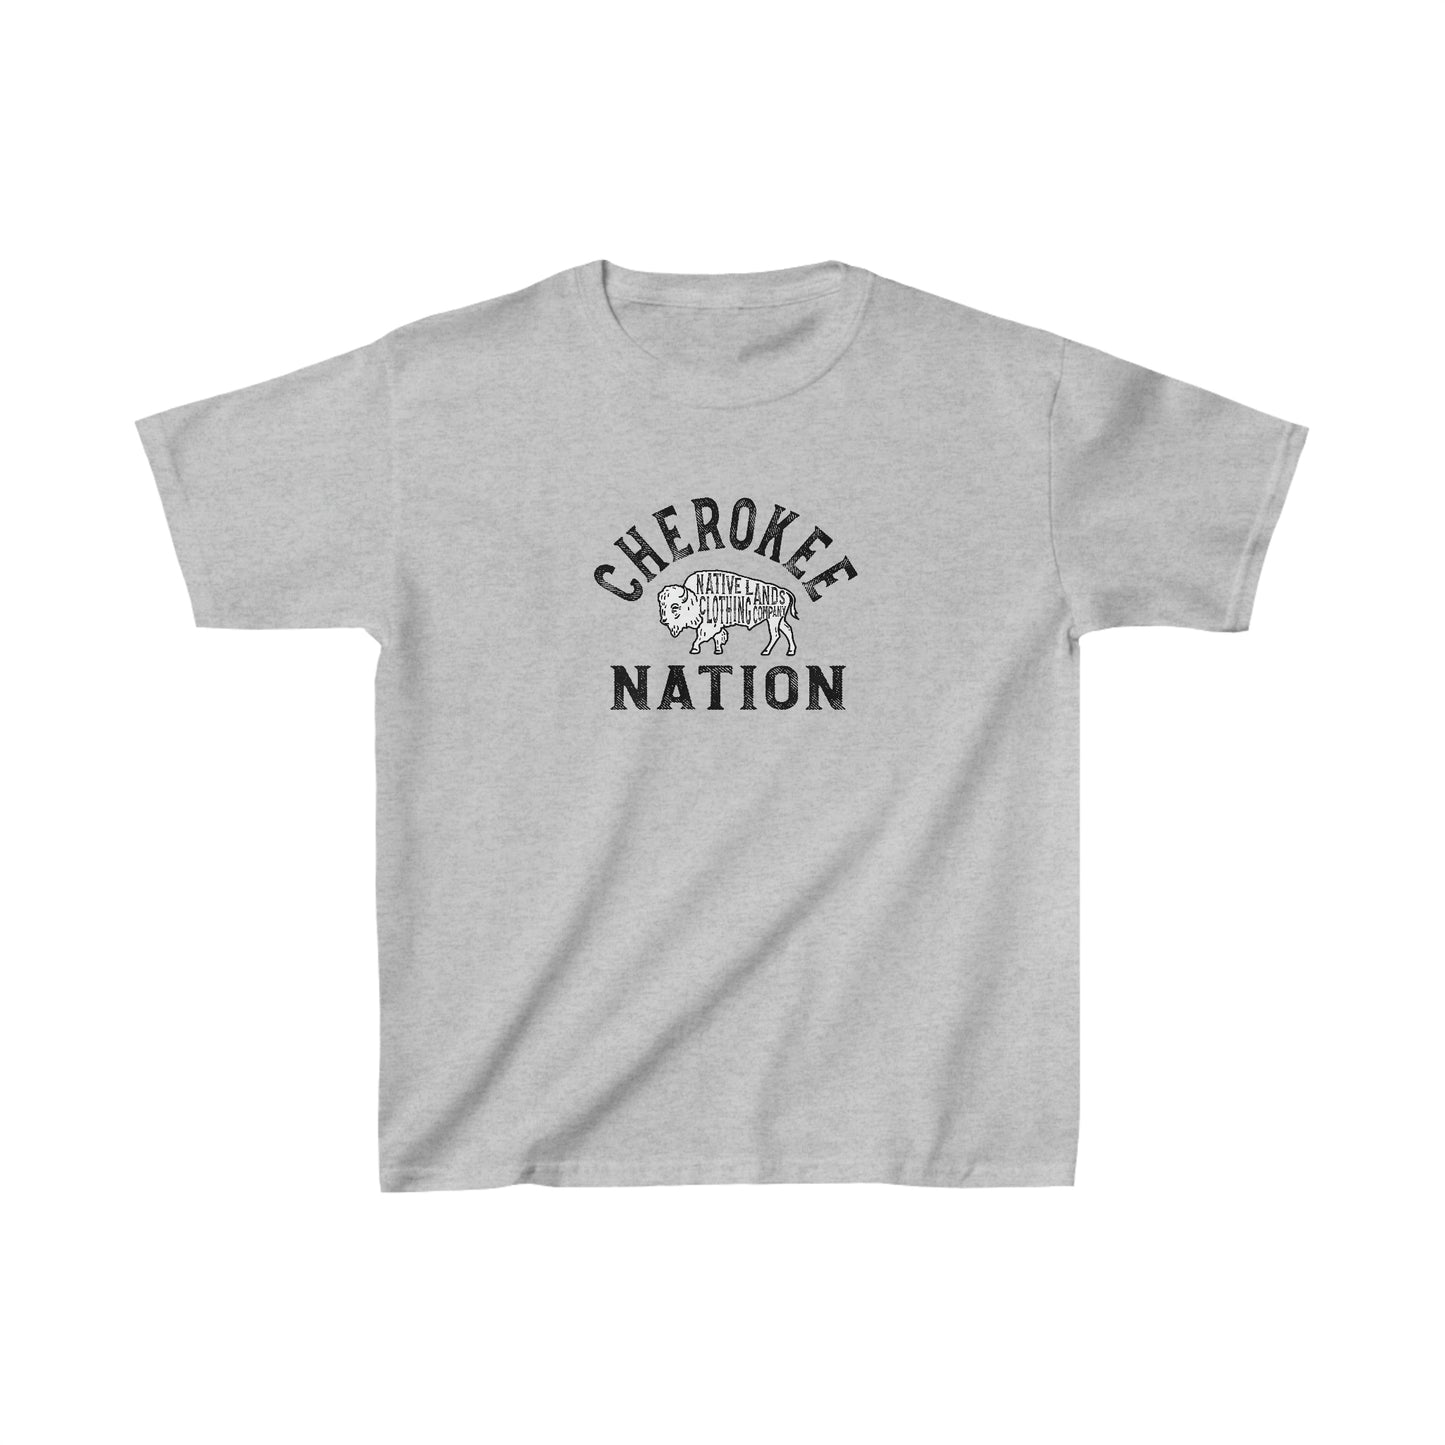 Youth Cherokee Nation Shirt Cotton Native American